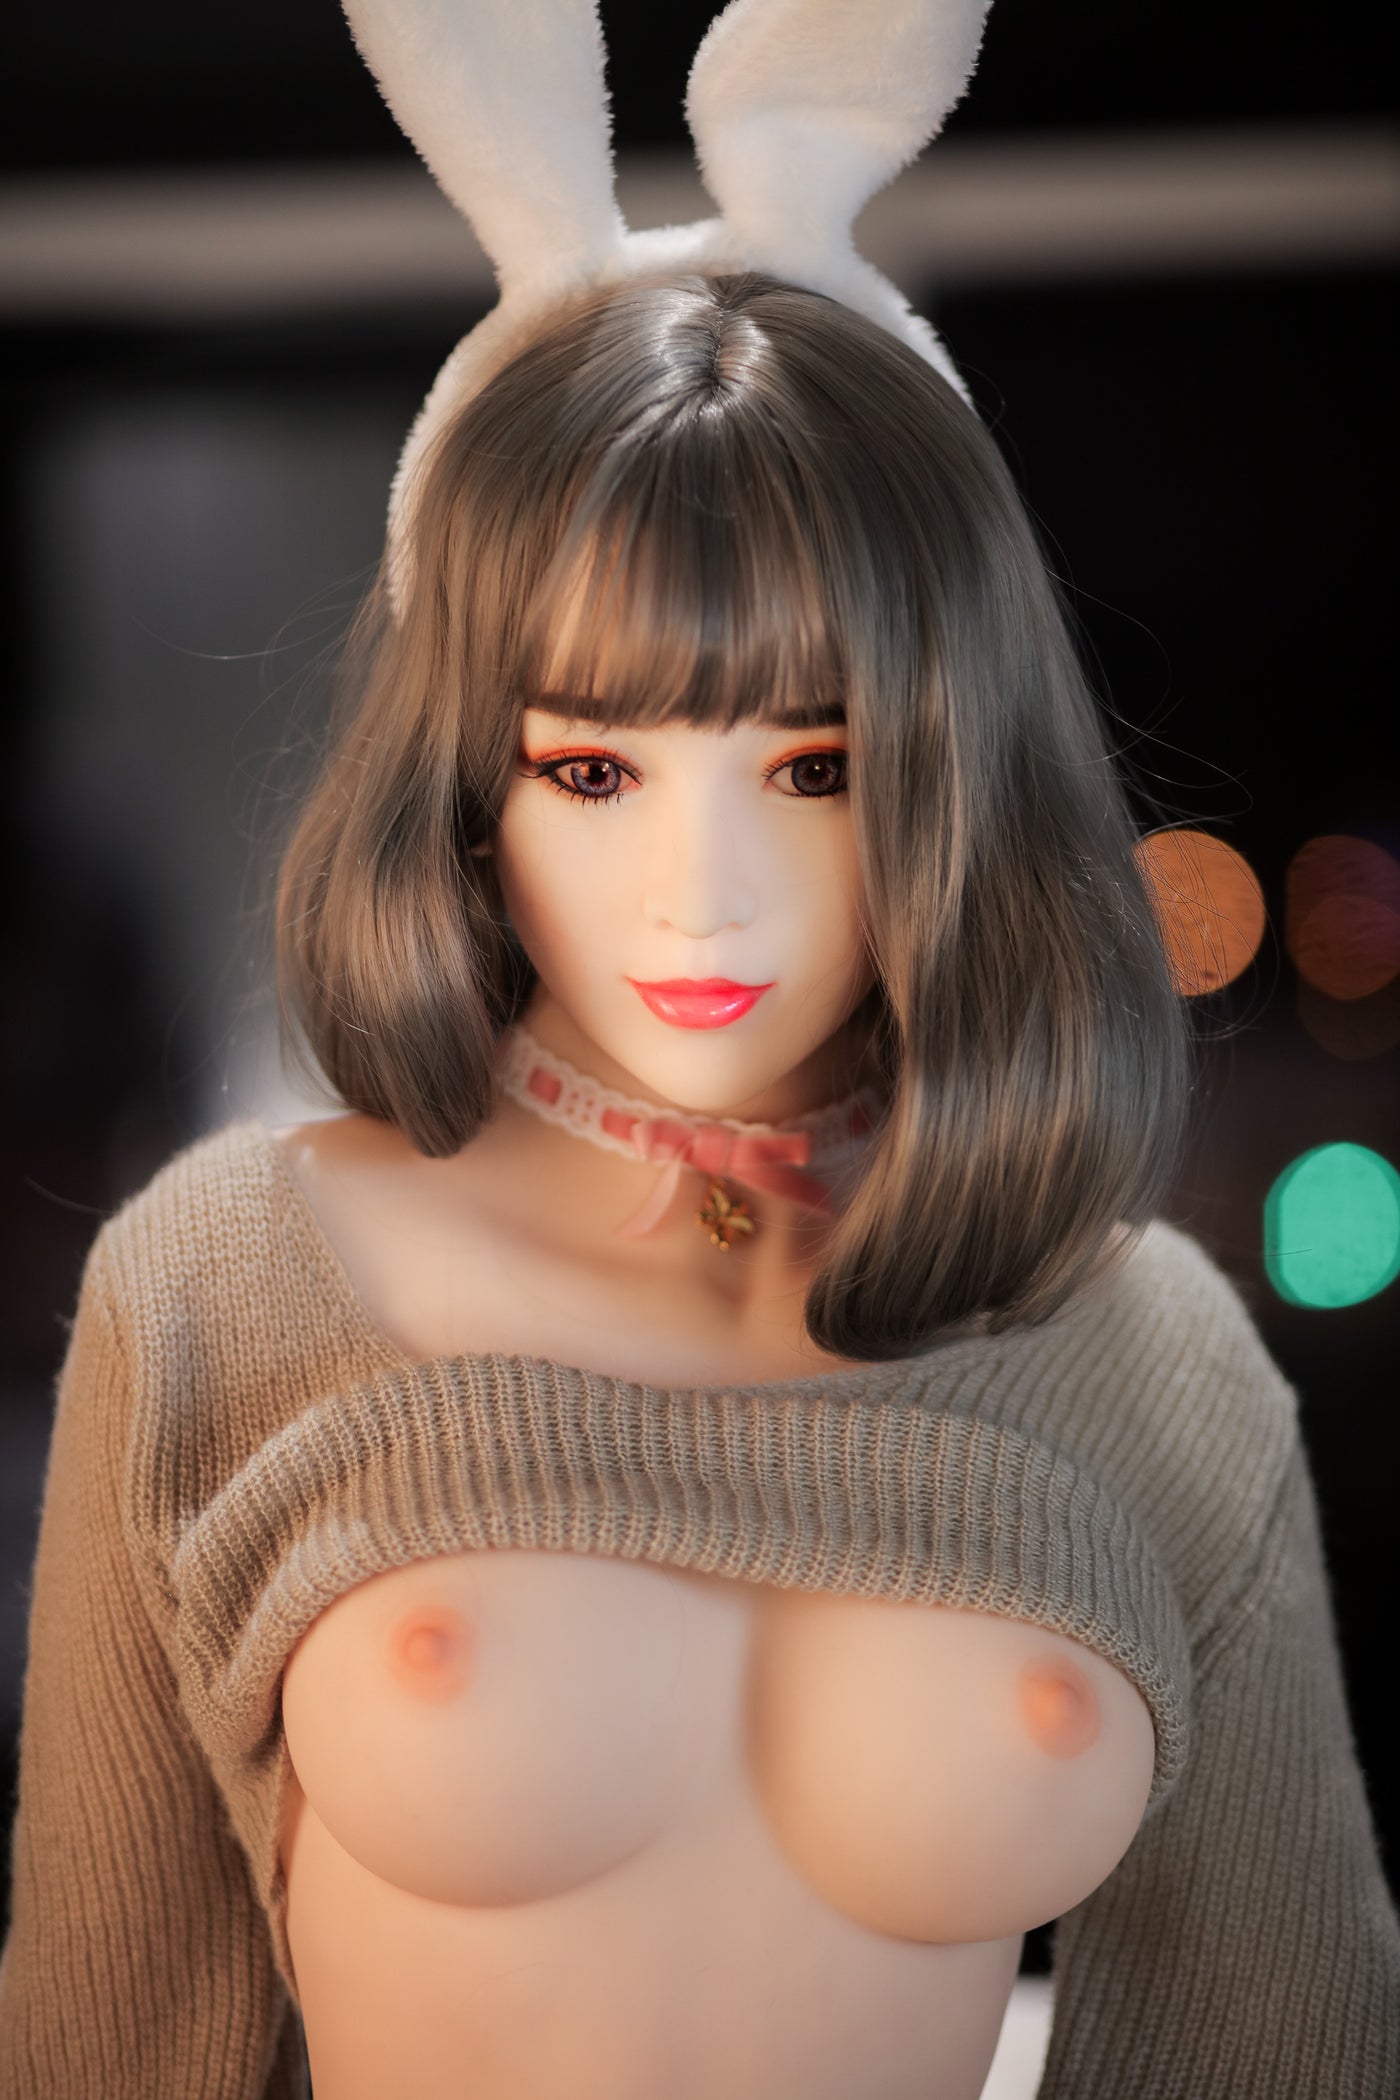 Neodoll Sugar Babe - Aitana - Realistic Sex Doll - Gel Breast - Uterus - 170cm - White